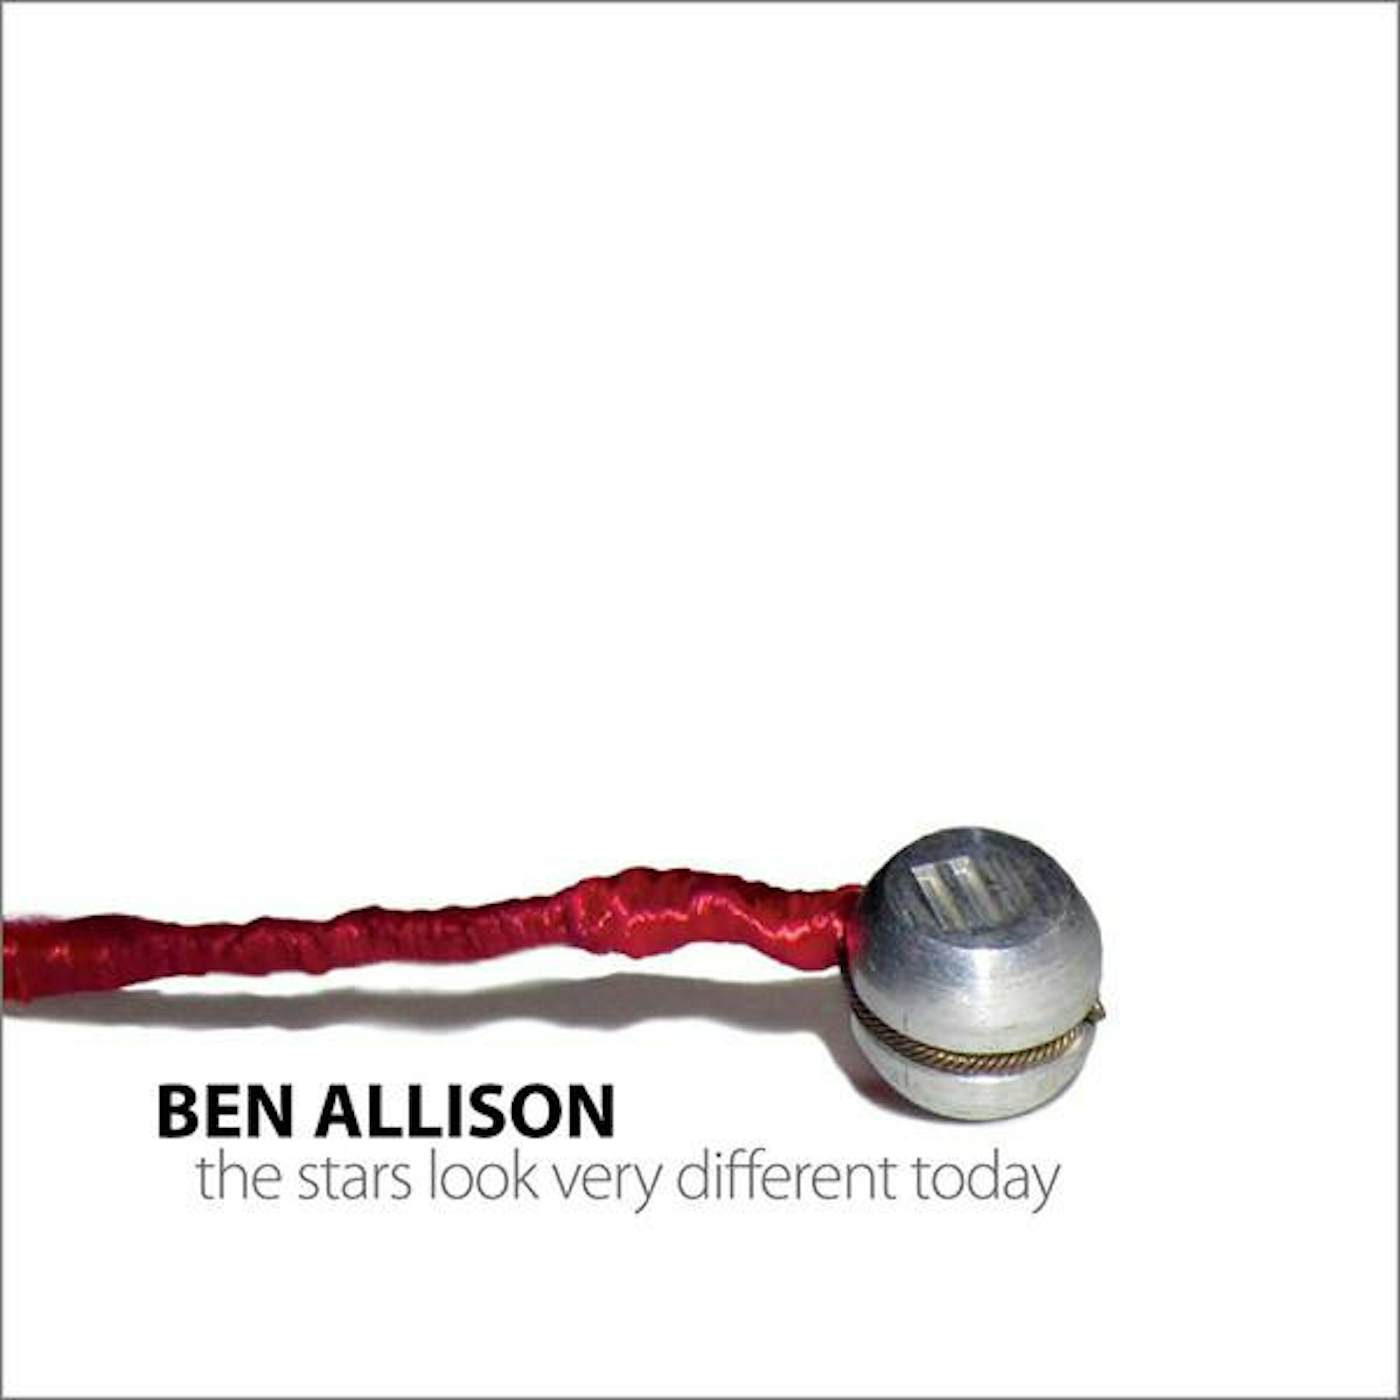 Ben Allison STARS LOOK VERY DIFFERENT TODAY CD